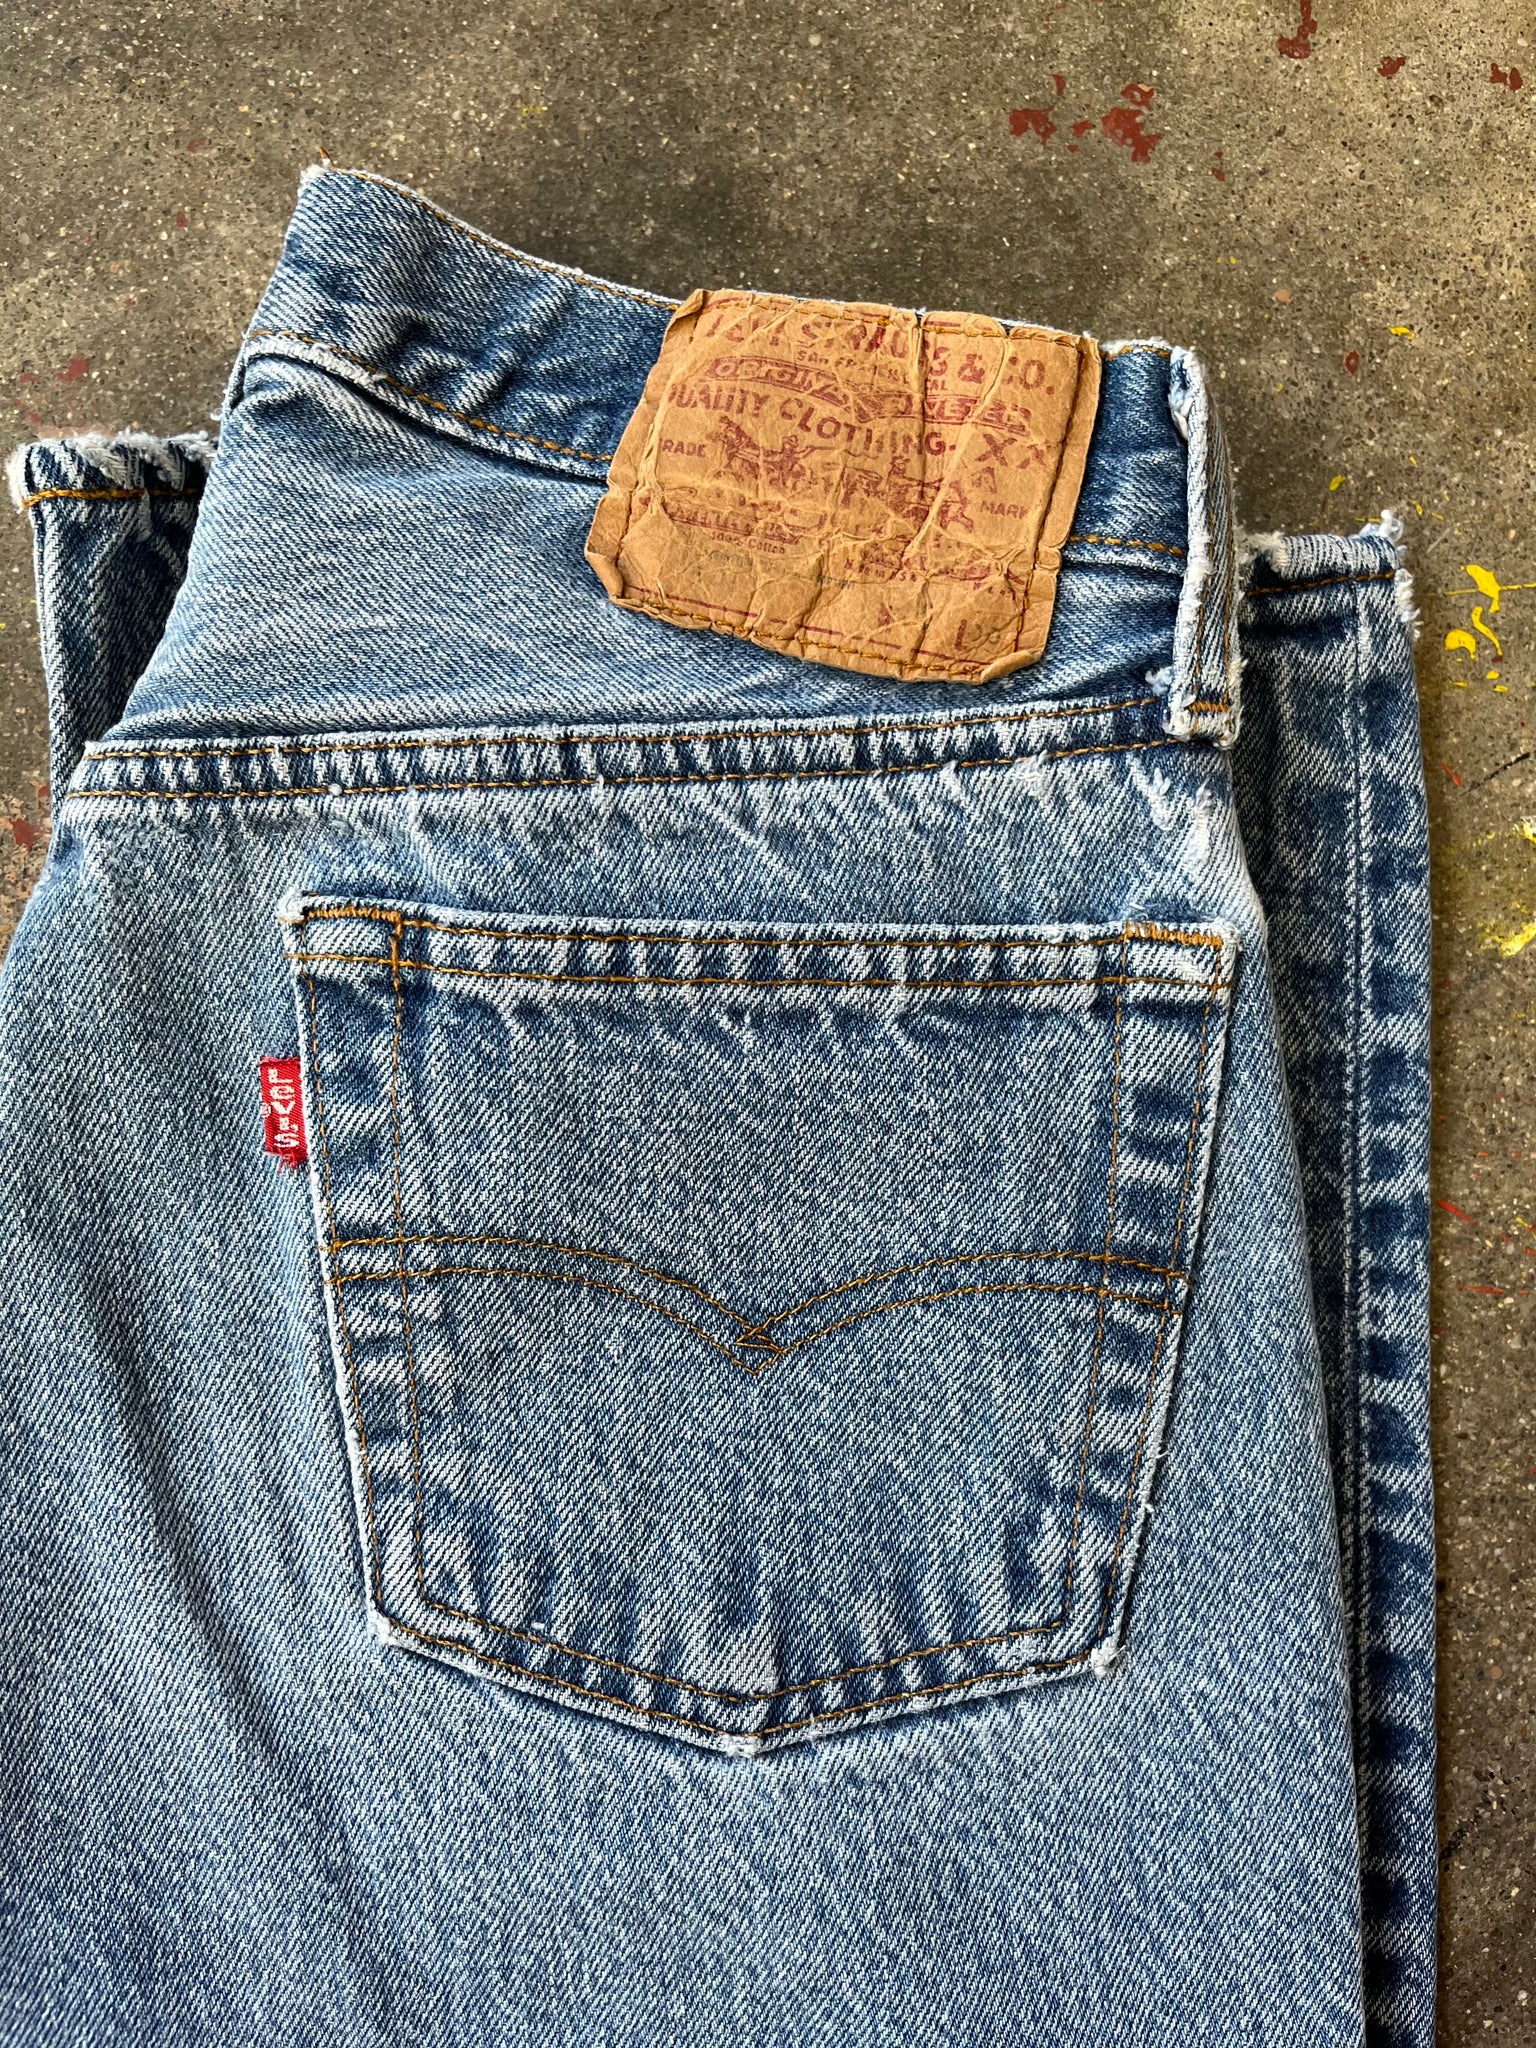 Vintage Levi's 501 Jeans (JYJ-0133)